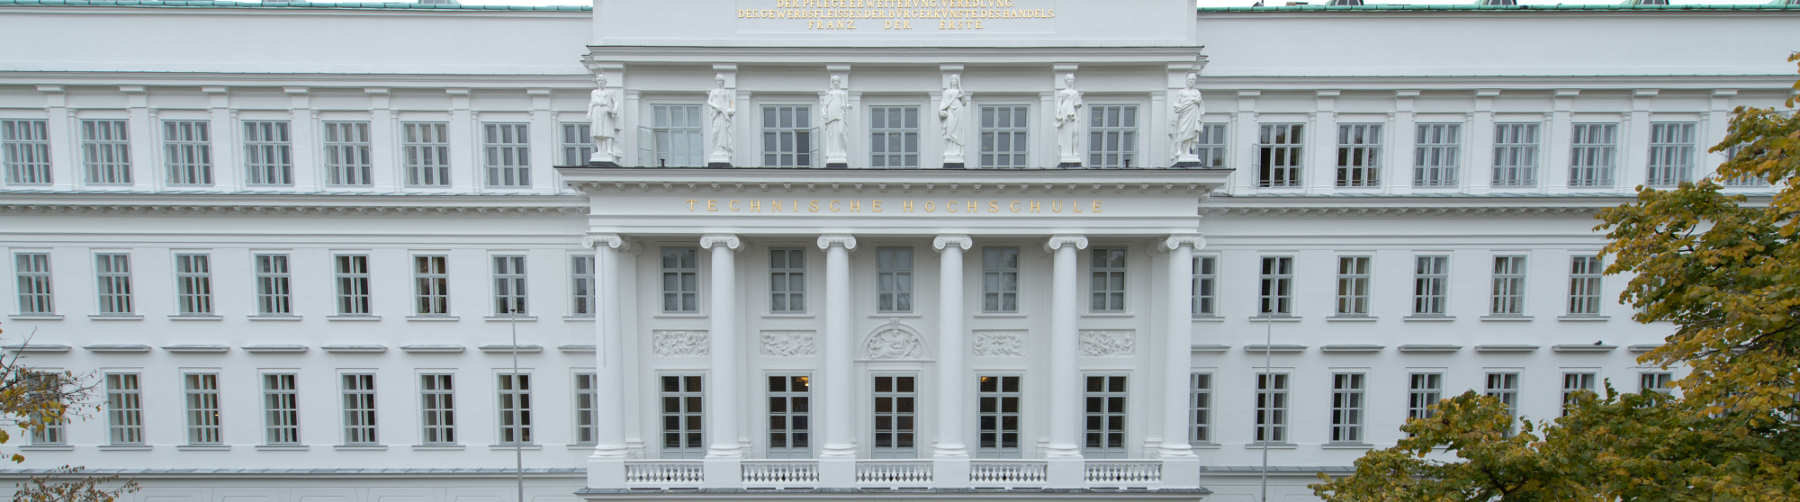 Main building of TU Wien